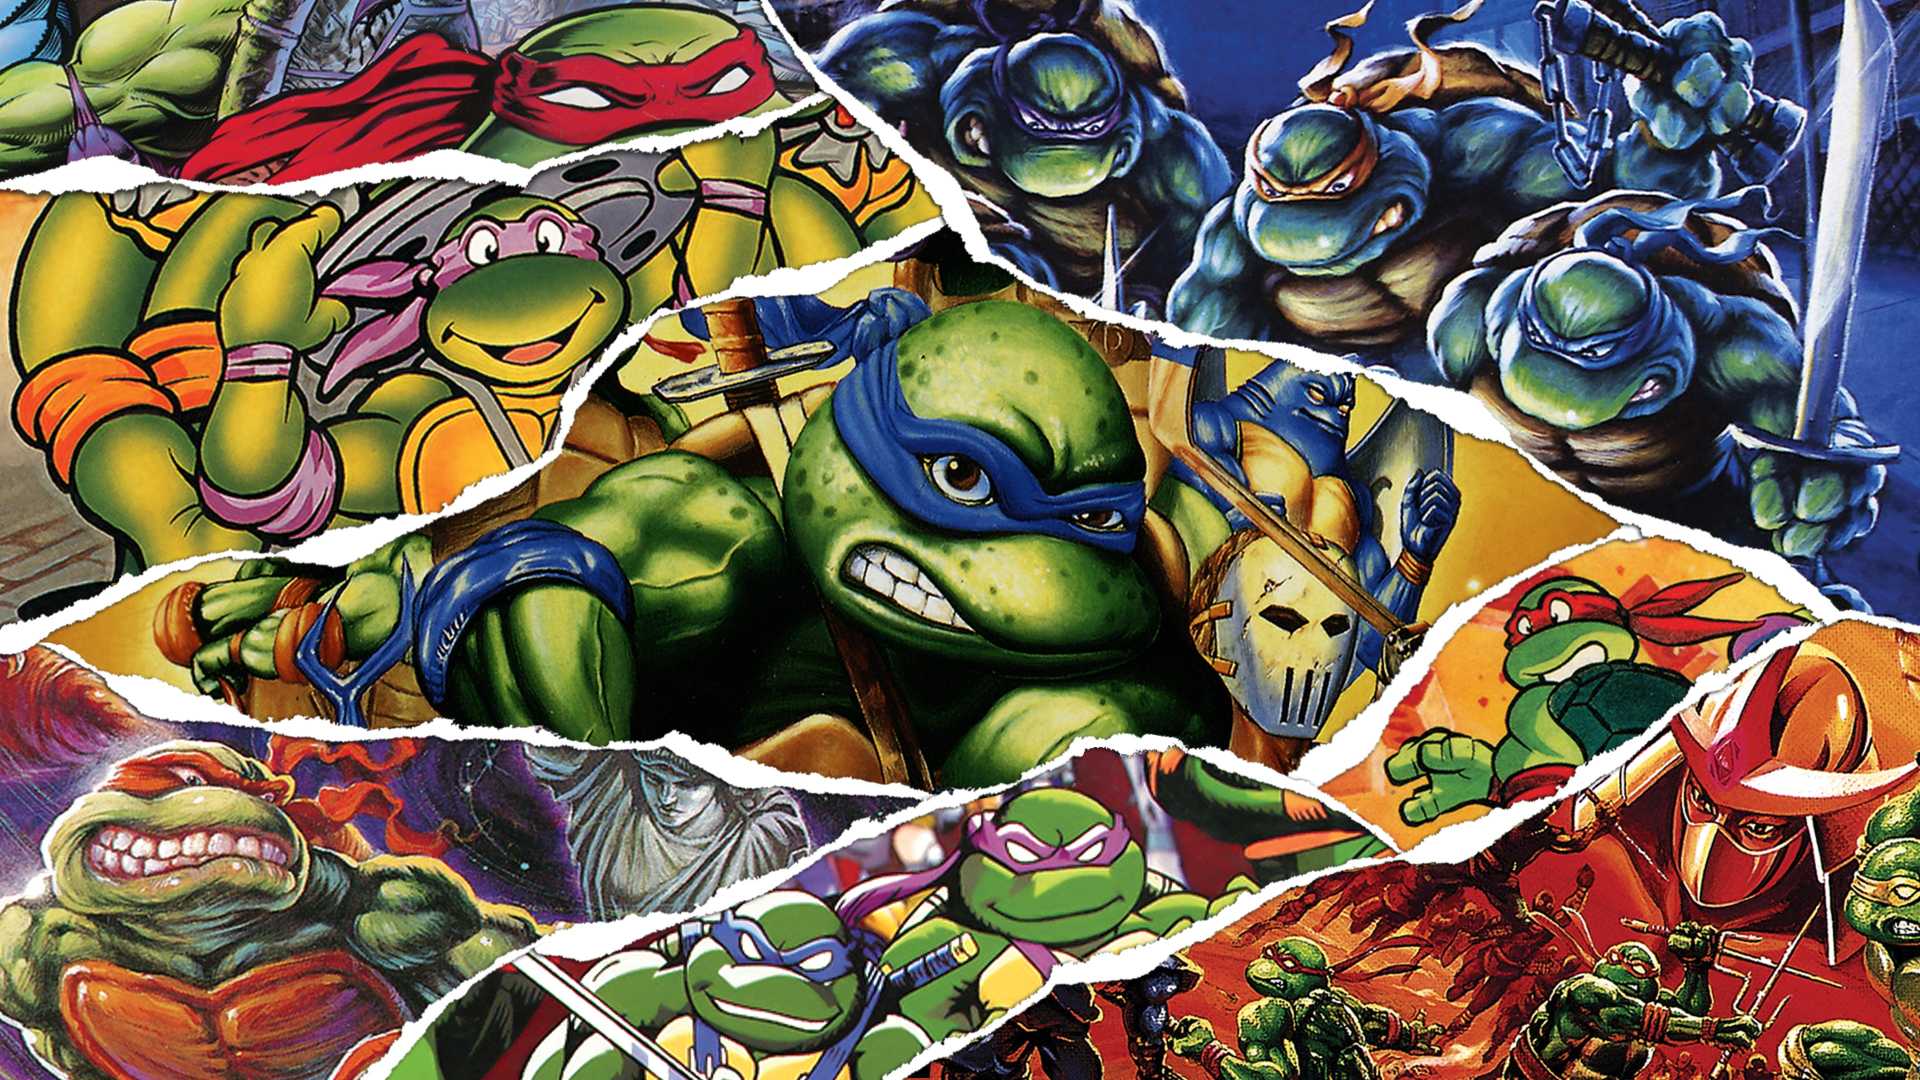 Teenage Mutant Ninja Turtles иксбокс. Черепашки ниндзя 2020. Шредер черепахи. Черепашки ниндзя Джоджо. Tmnt xbox